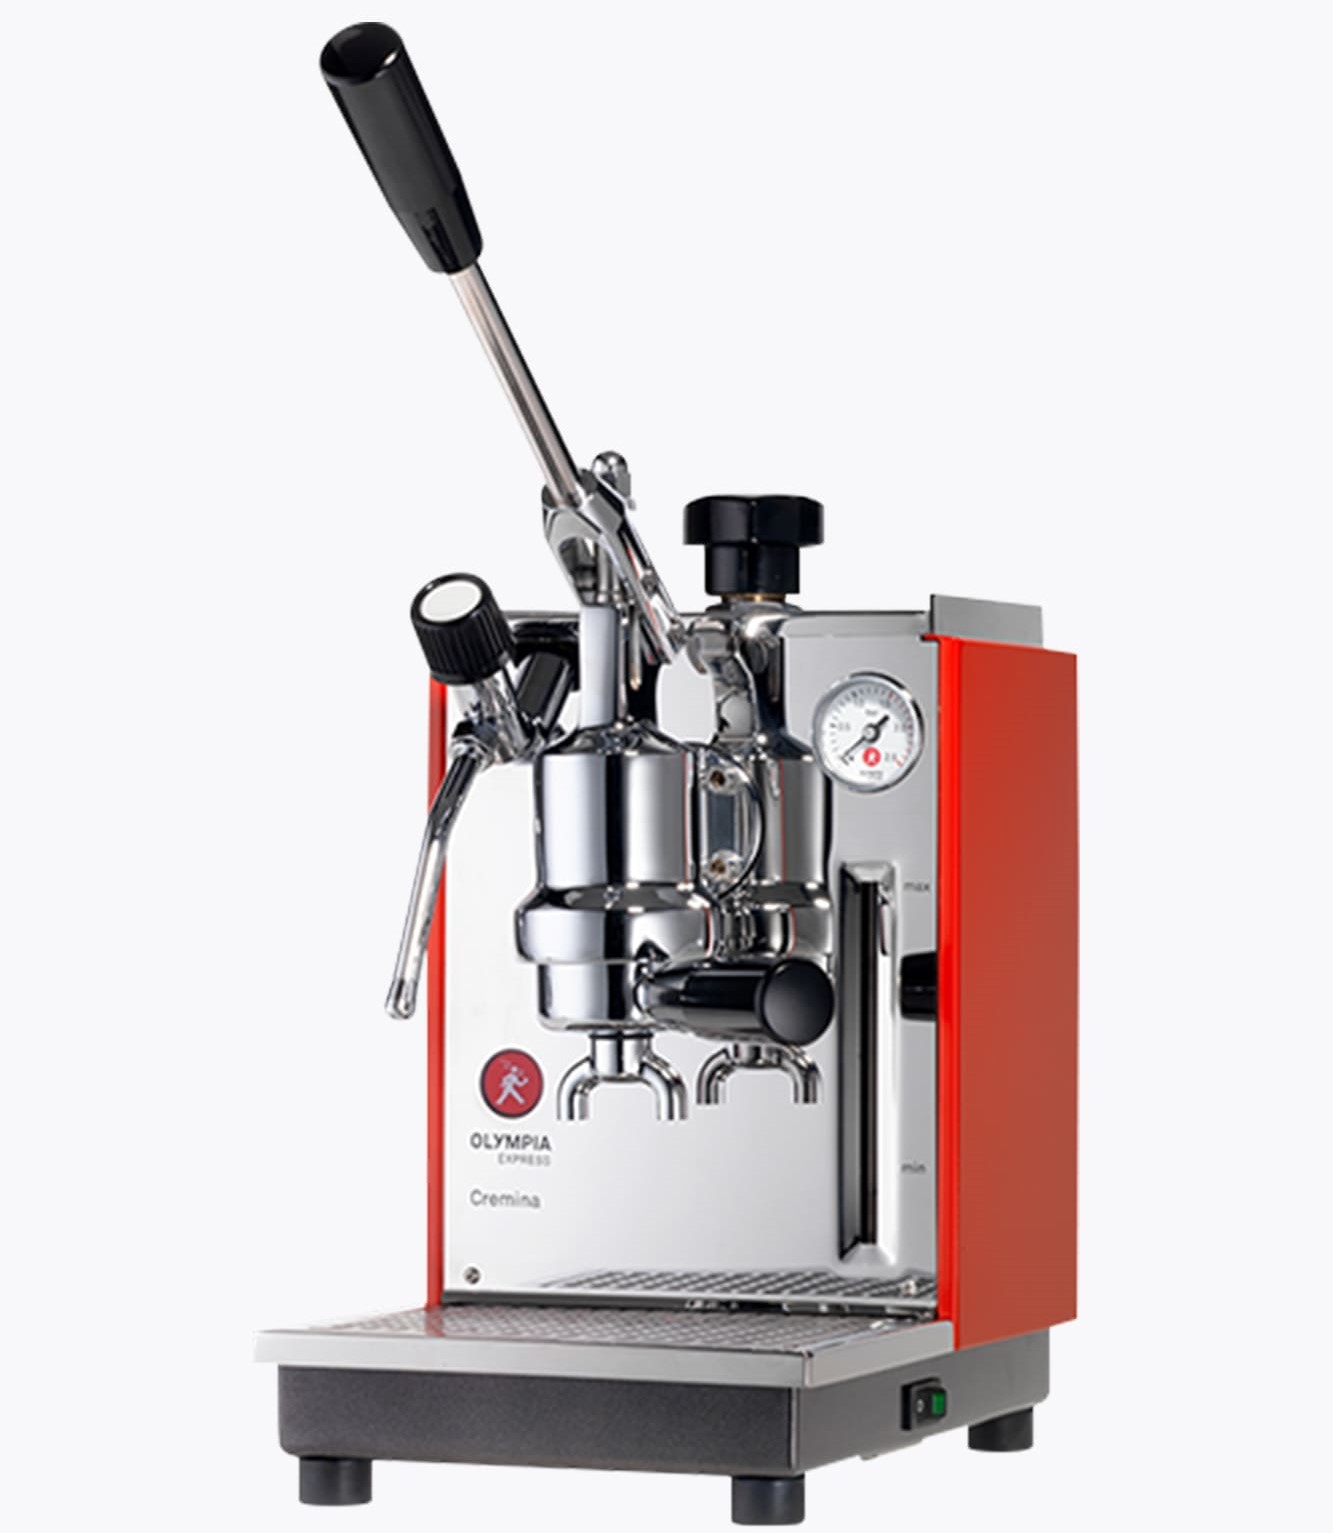 Olympia Express Handhebel Espressomaschine Cremina Rot